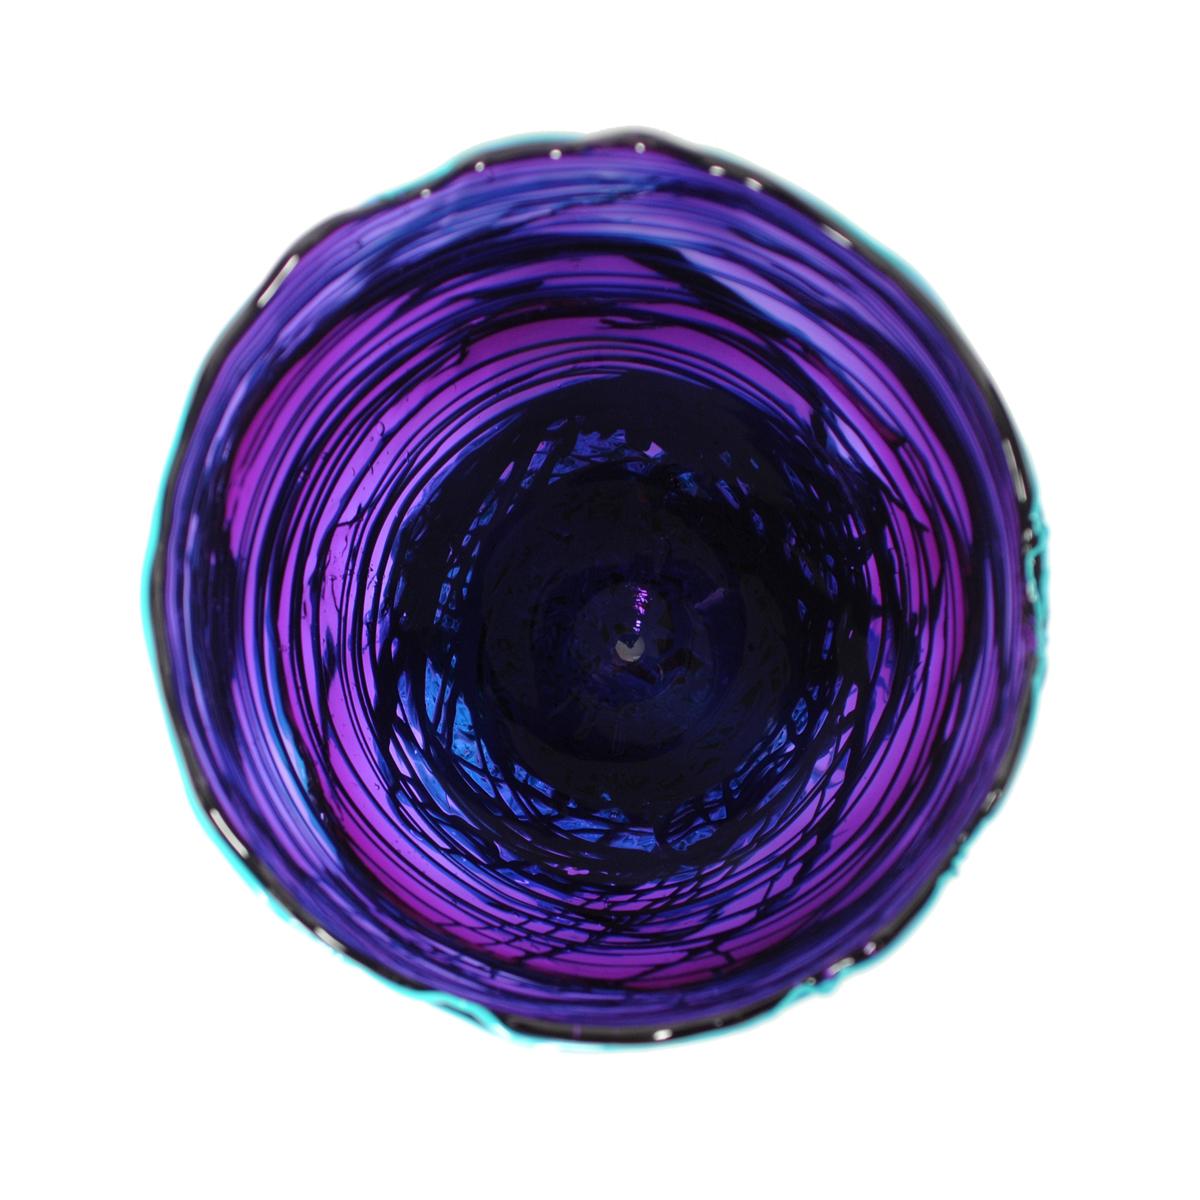 Italian Contemporary Gaetano Pesce Spaghetti XL Vase Soft Resin Purple, Turquoise For Sale